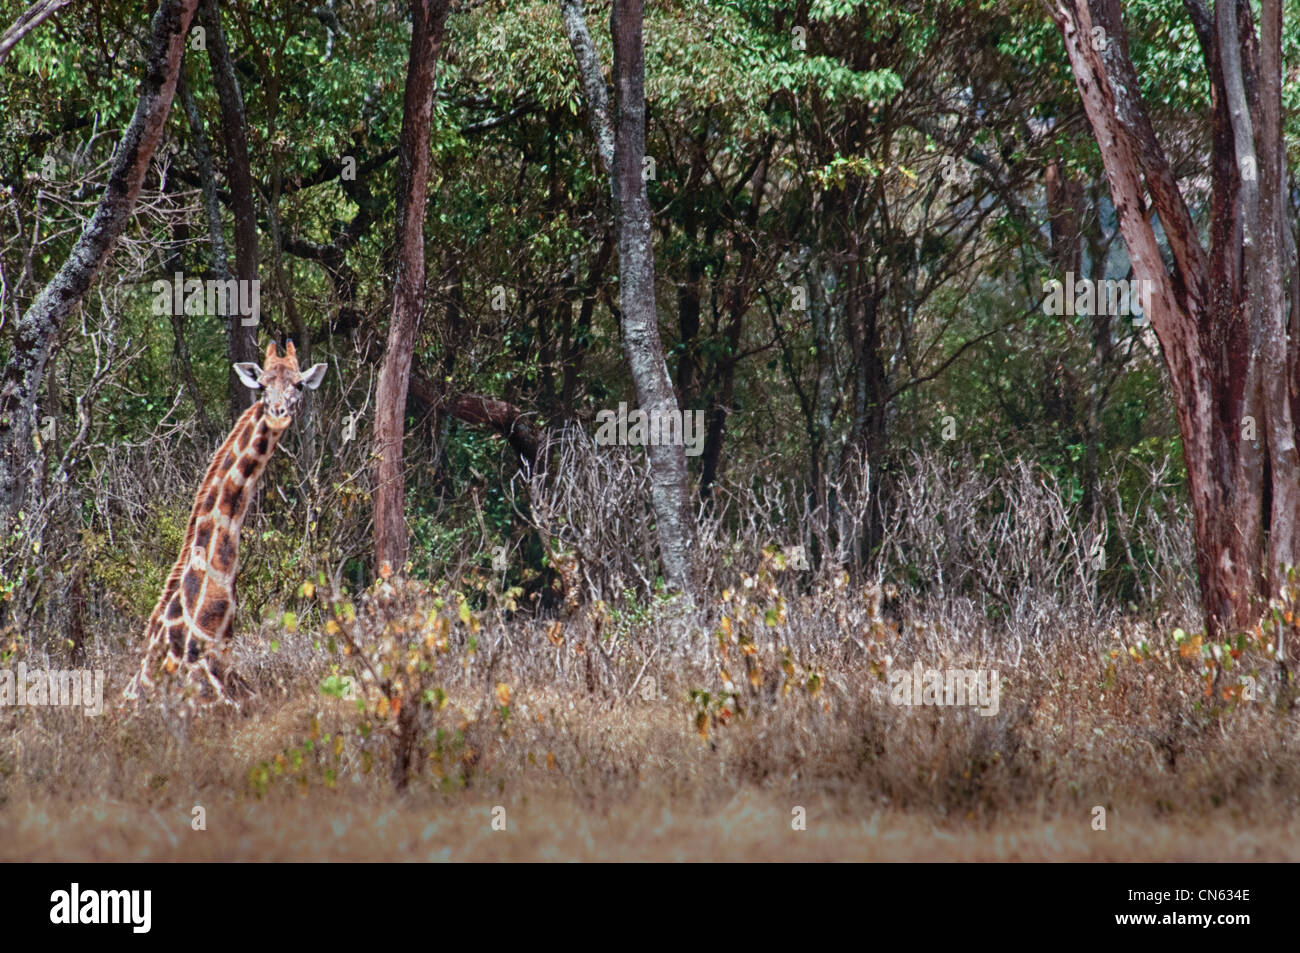 Rothschild or Baringo Giraffe, Giraffa camelopardalis rothschild, sitting down, Giraffe Manor, Nairobi, Kenya, Africa Stock Photo